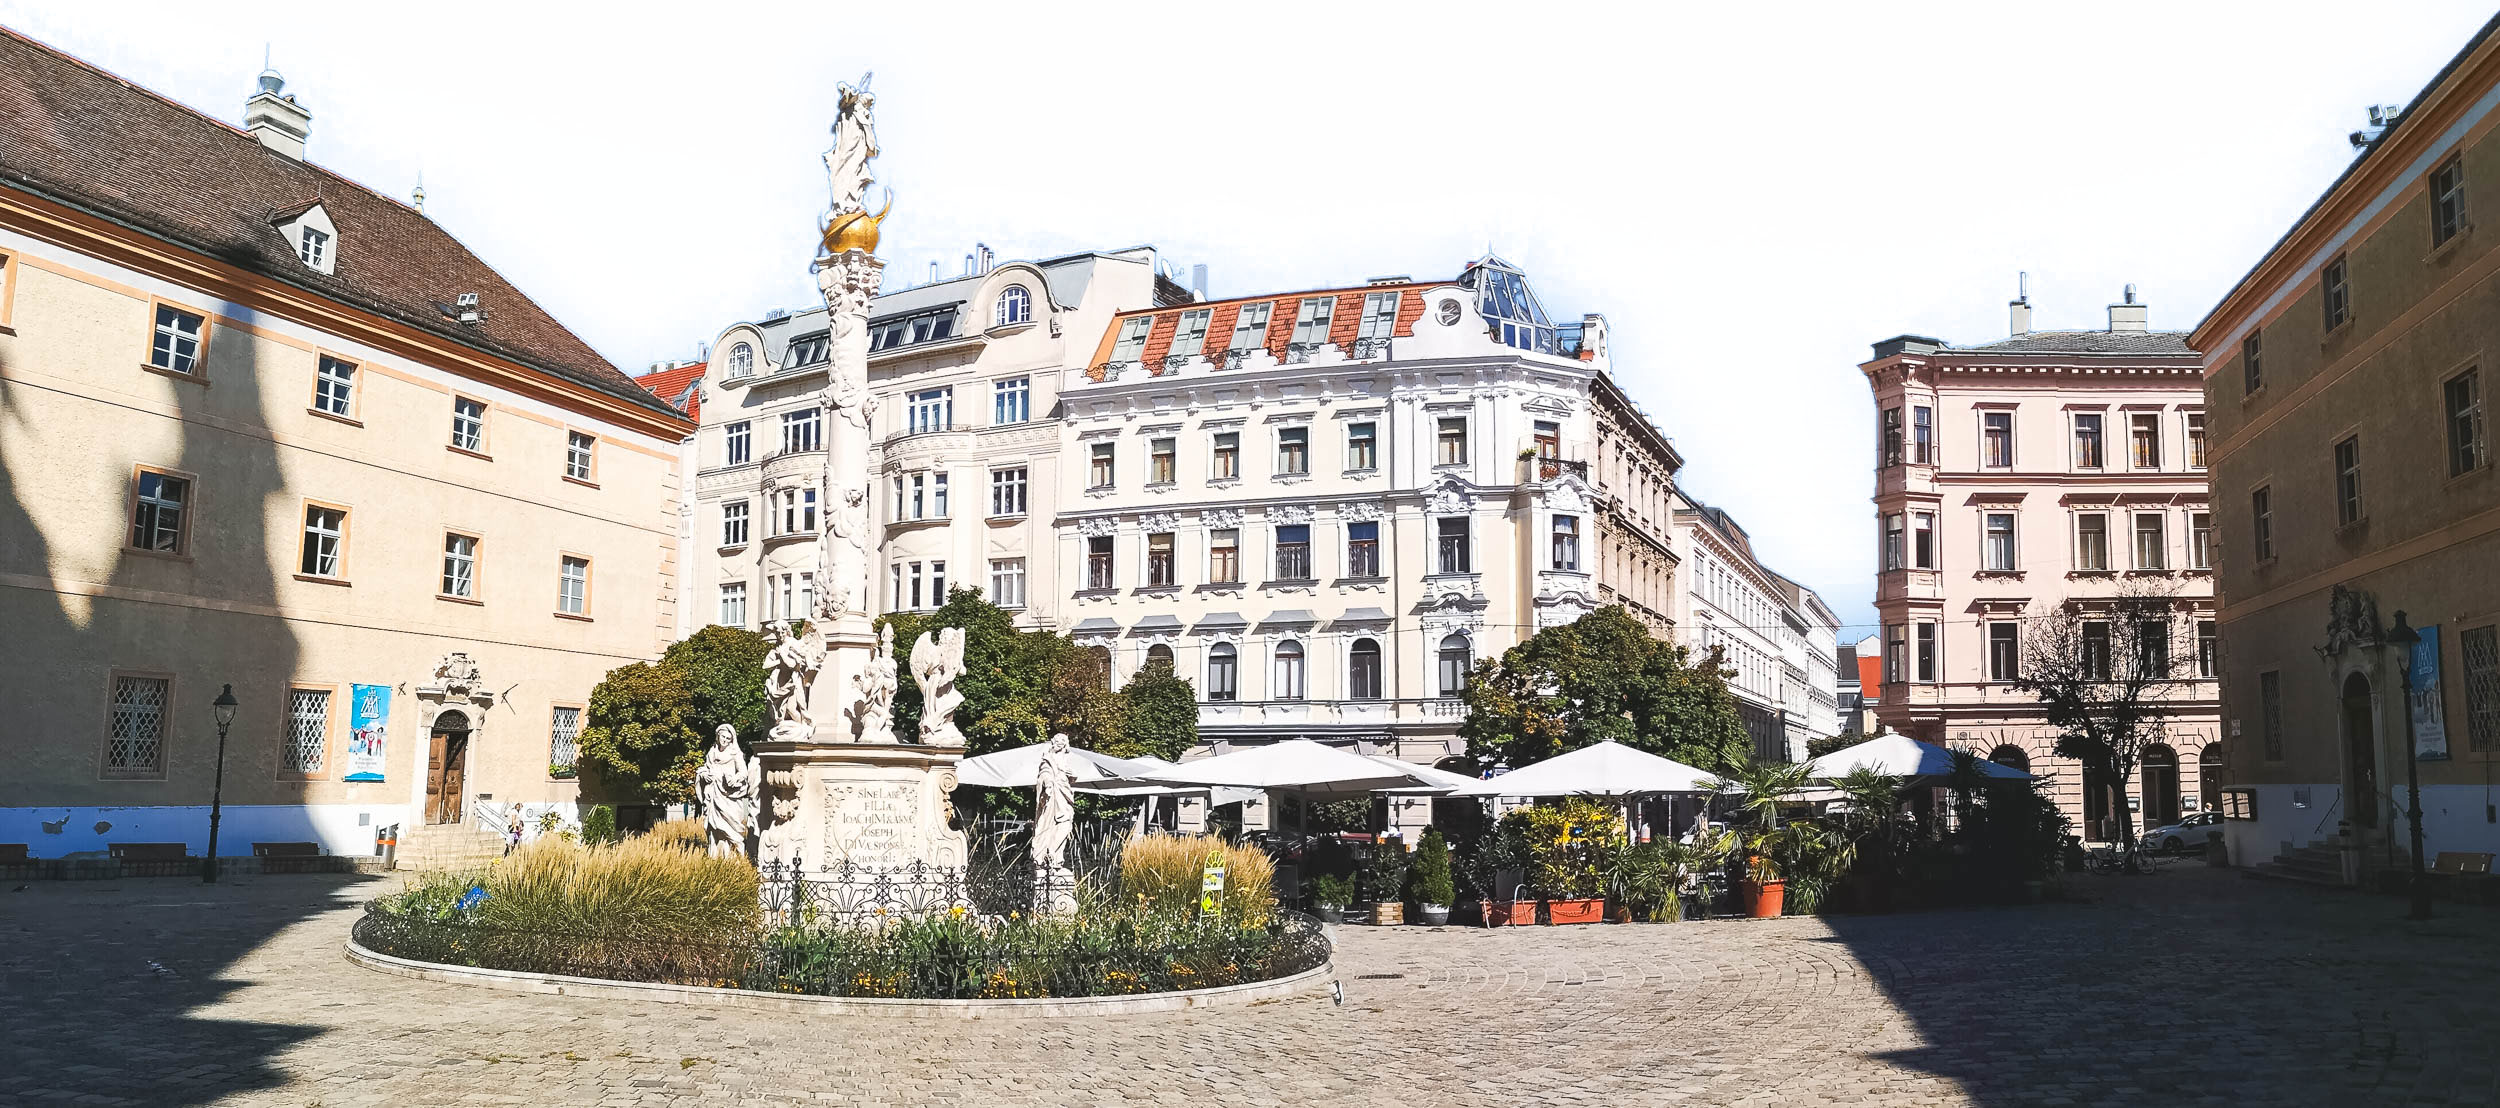 Jodok DInk square in Josefstadt, Vienna